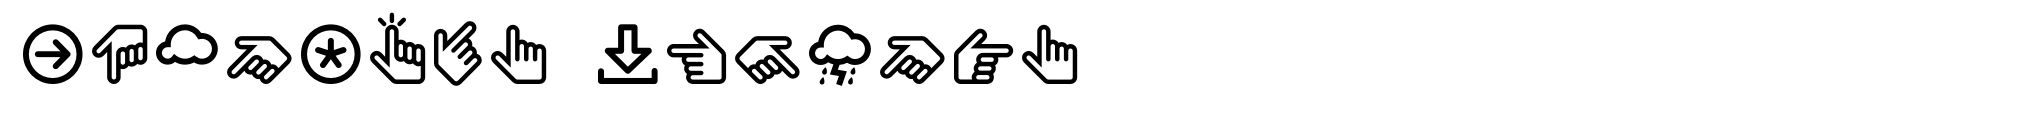 InfoBits Symbols image